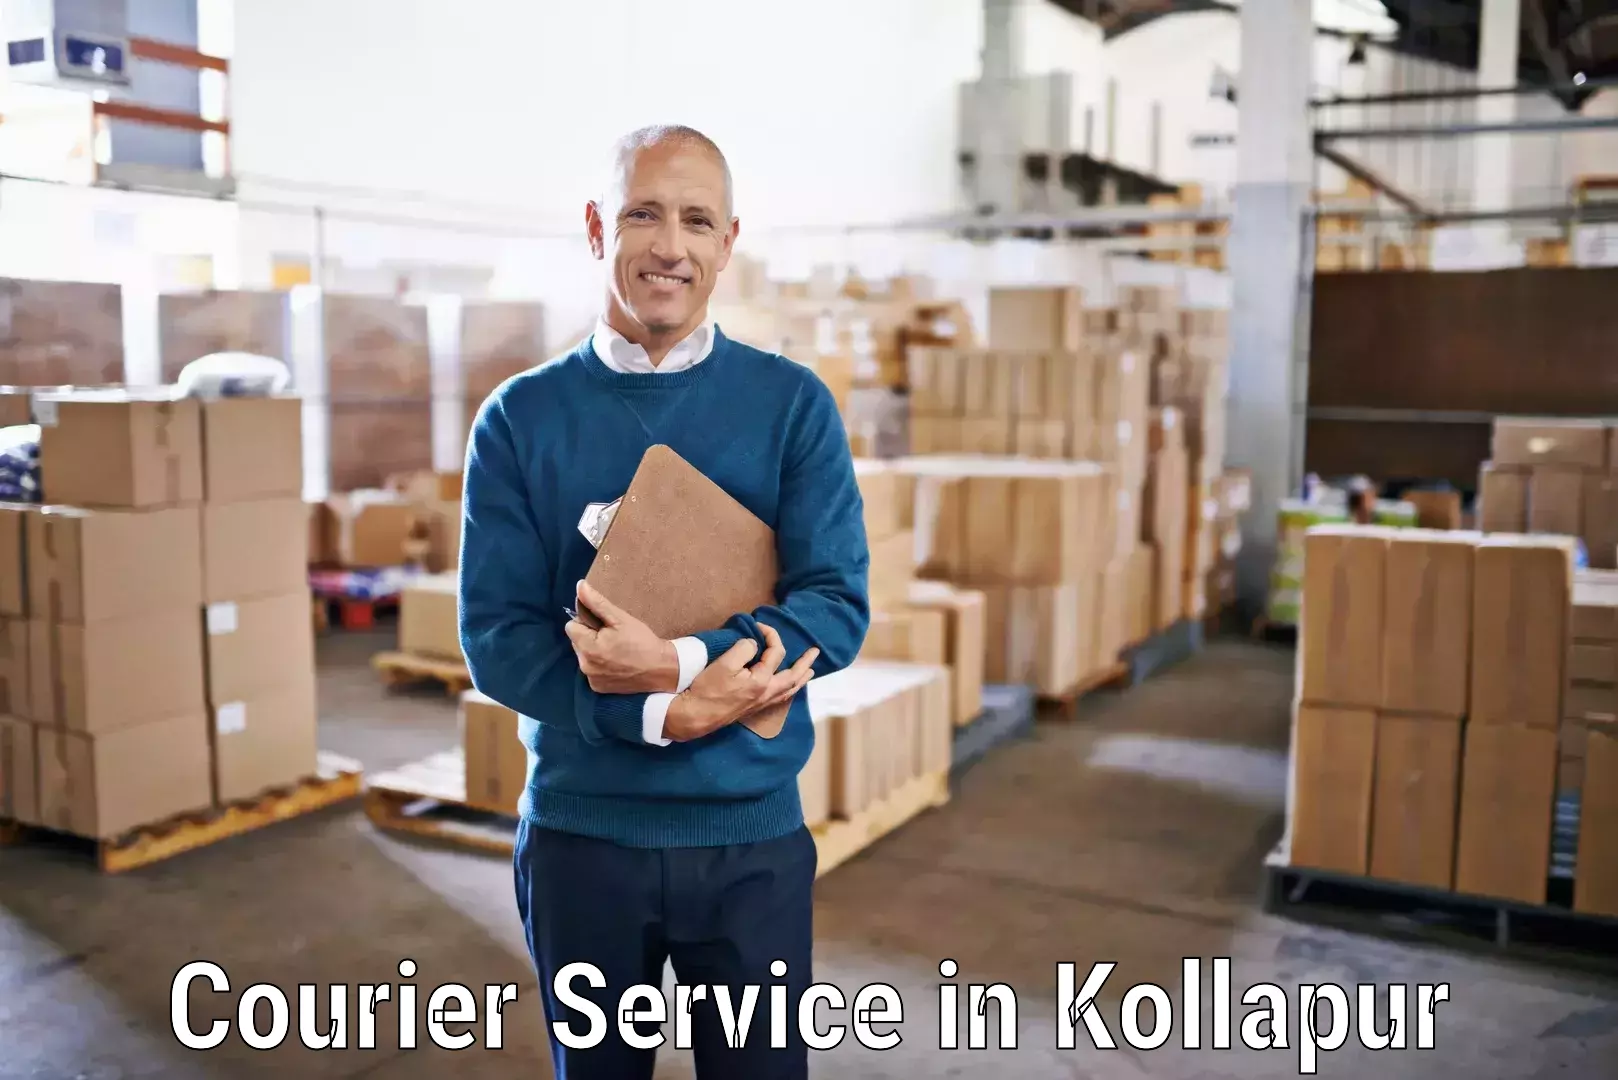 Advanced logistics management in Kollapur